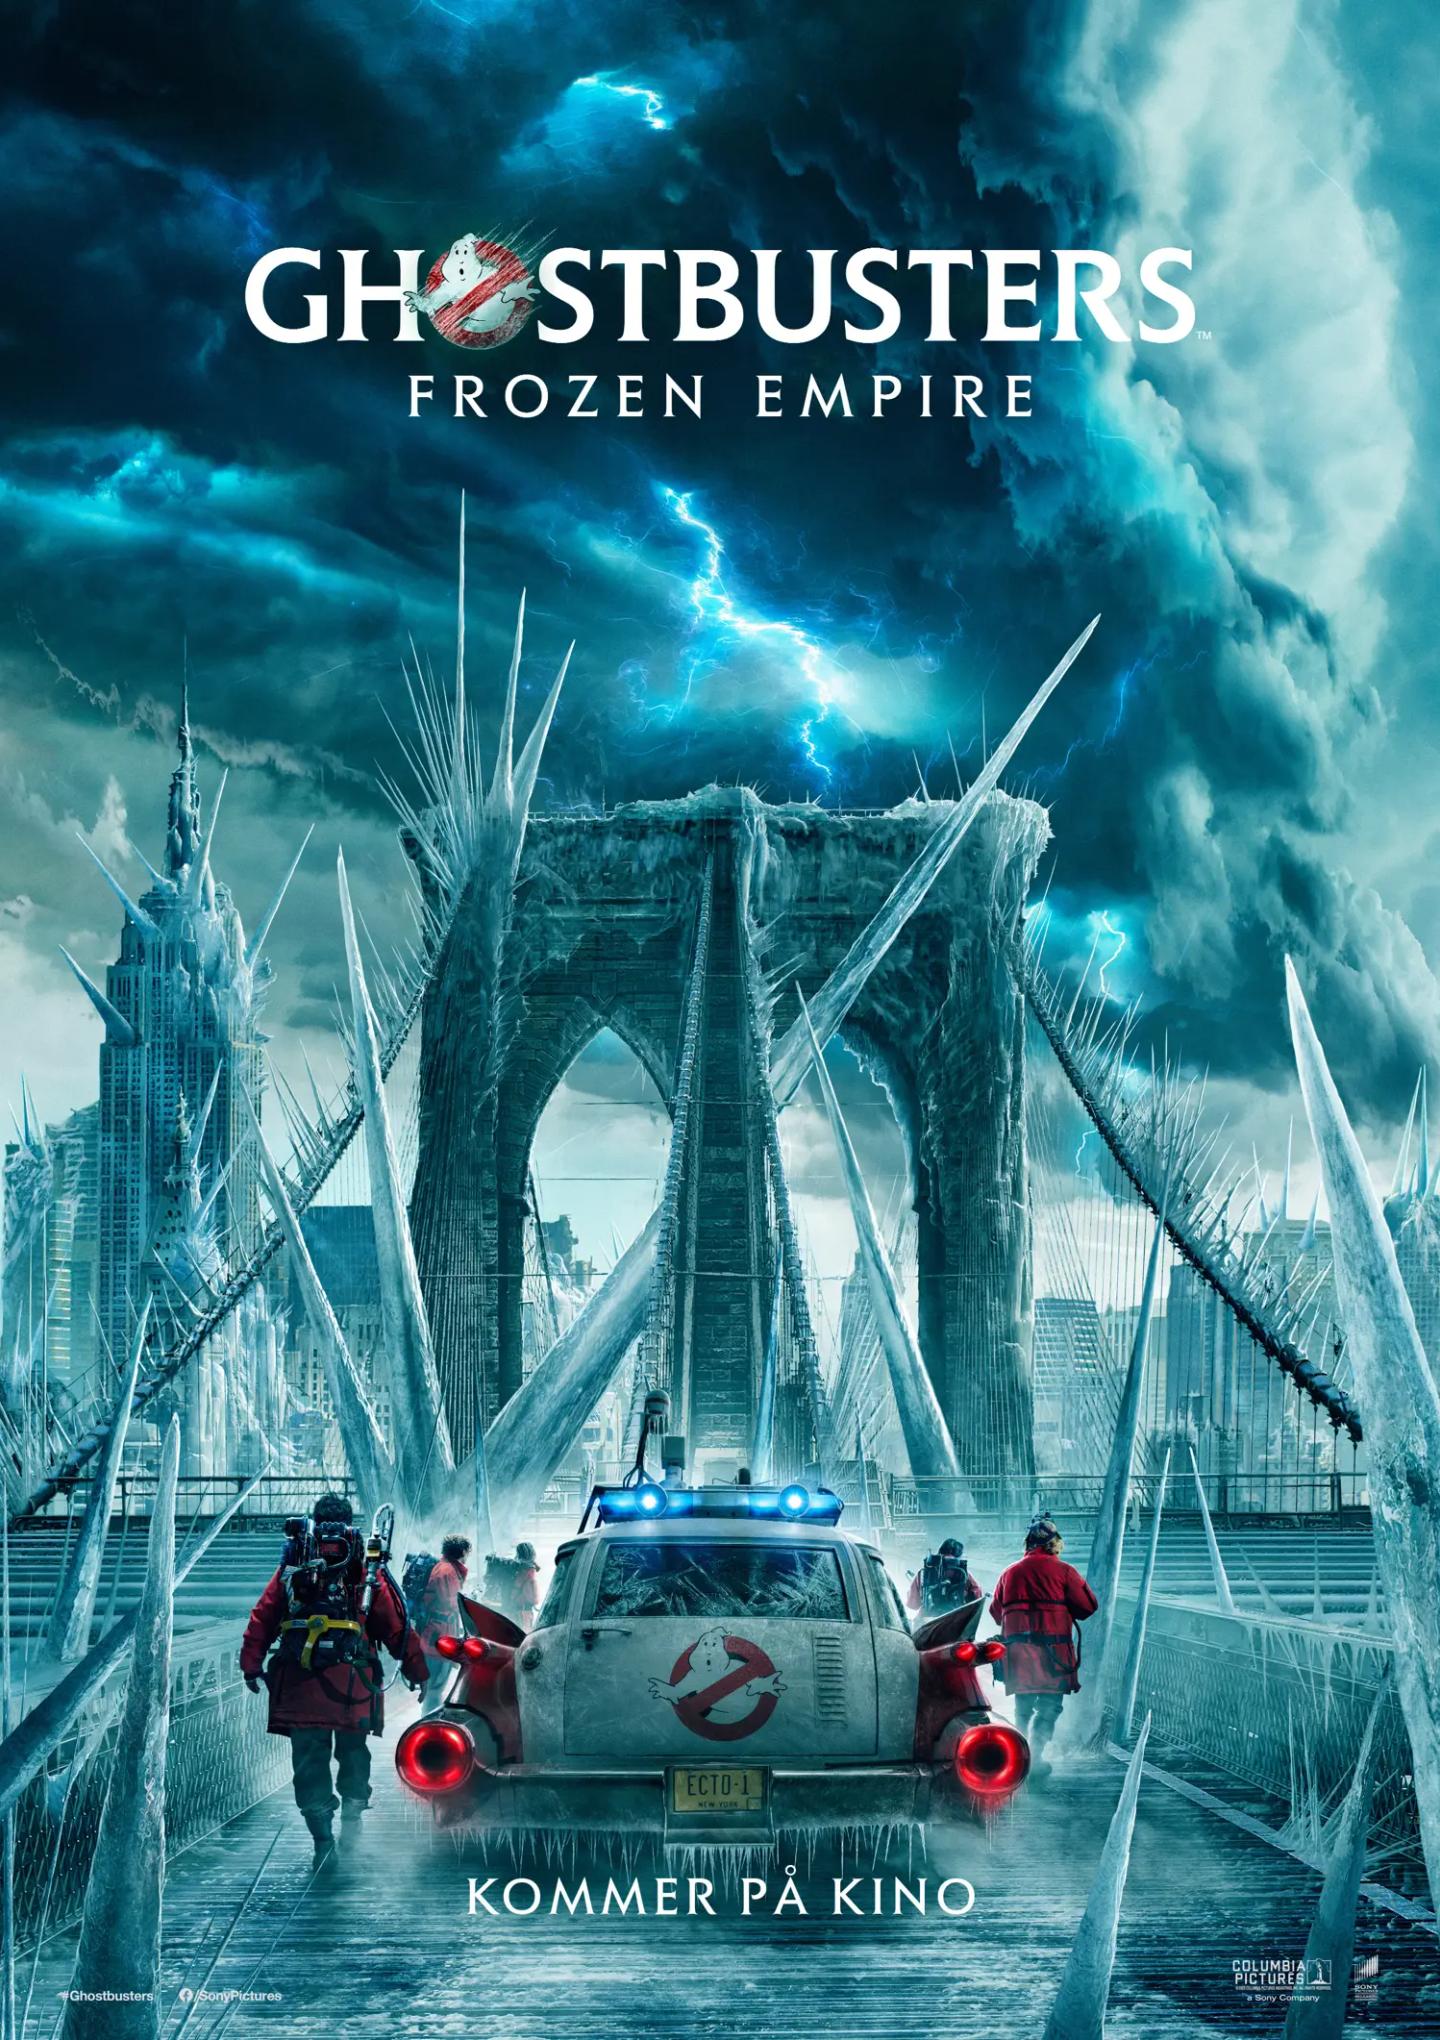 Plakat for 'Ghostbusters: Frozen Empire'